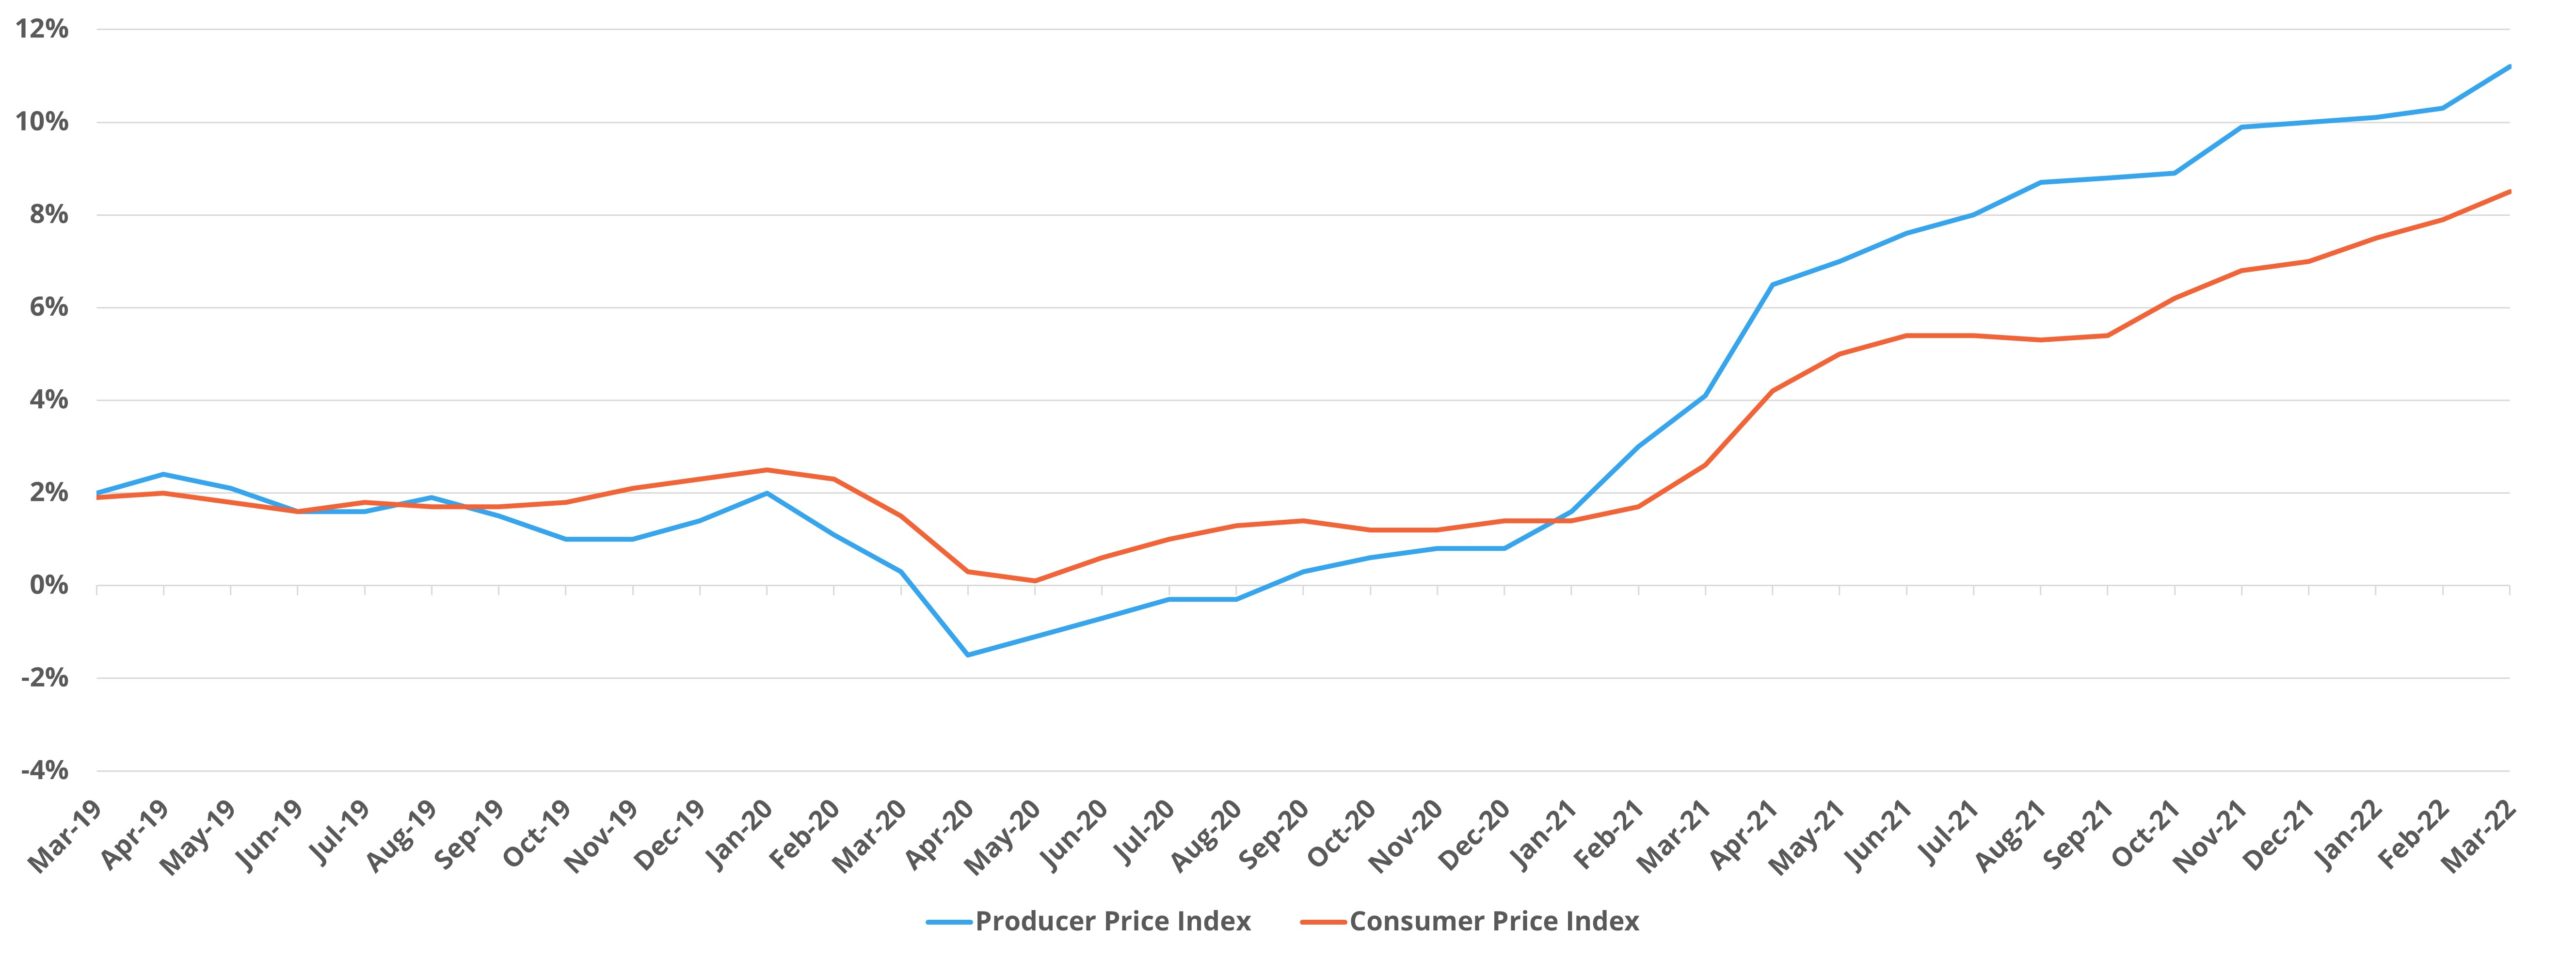 Producer Price Index and Consumer Price Index